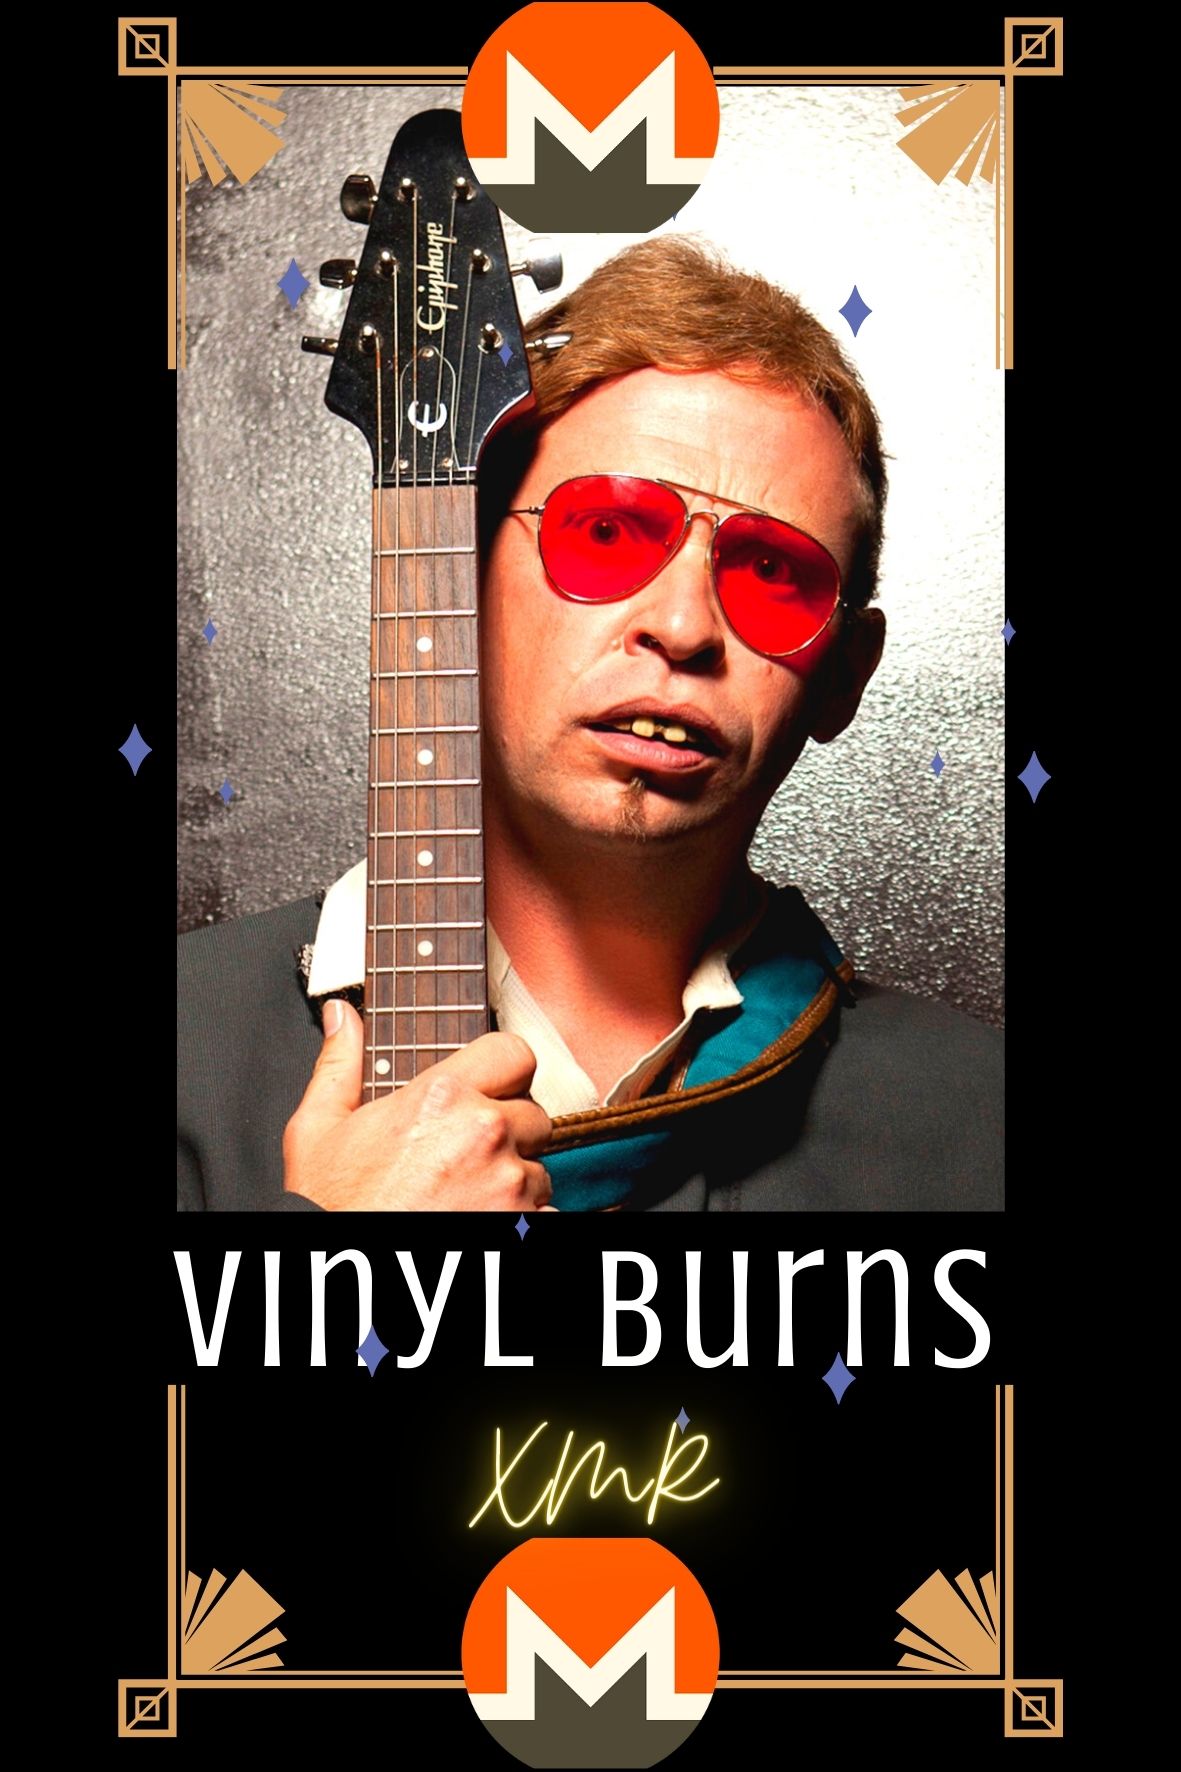 Vinyl Burns - XMR